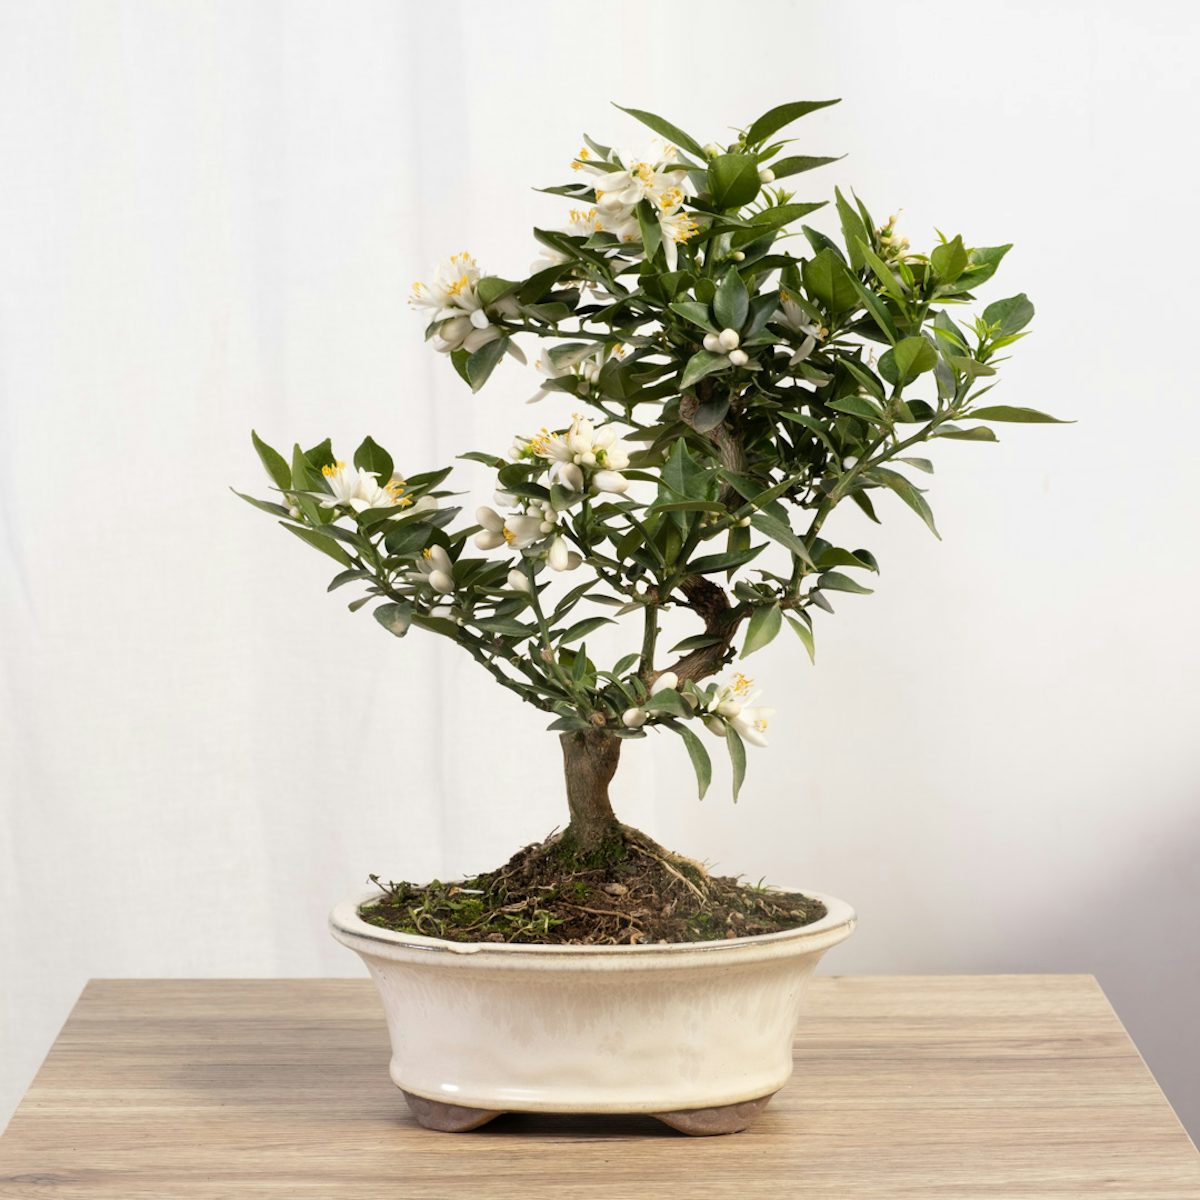 Bonsai 12 years Citrus myrtifolia